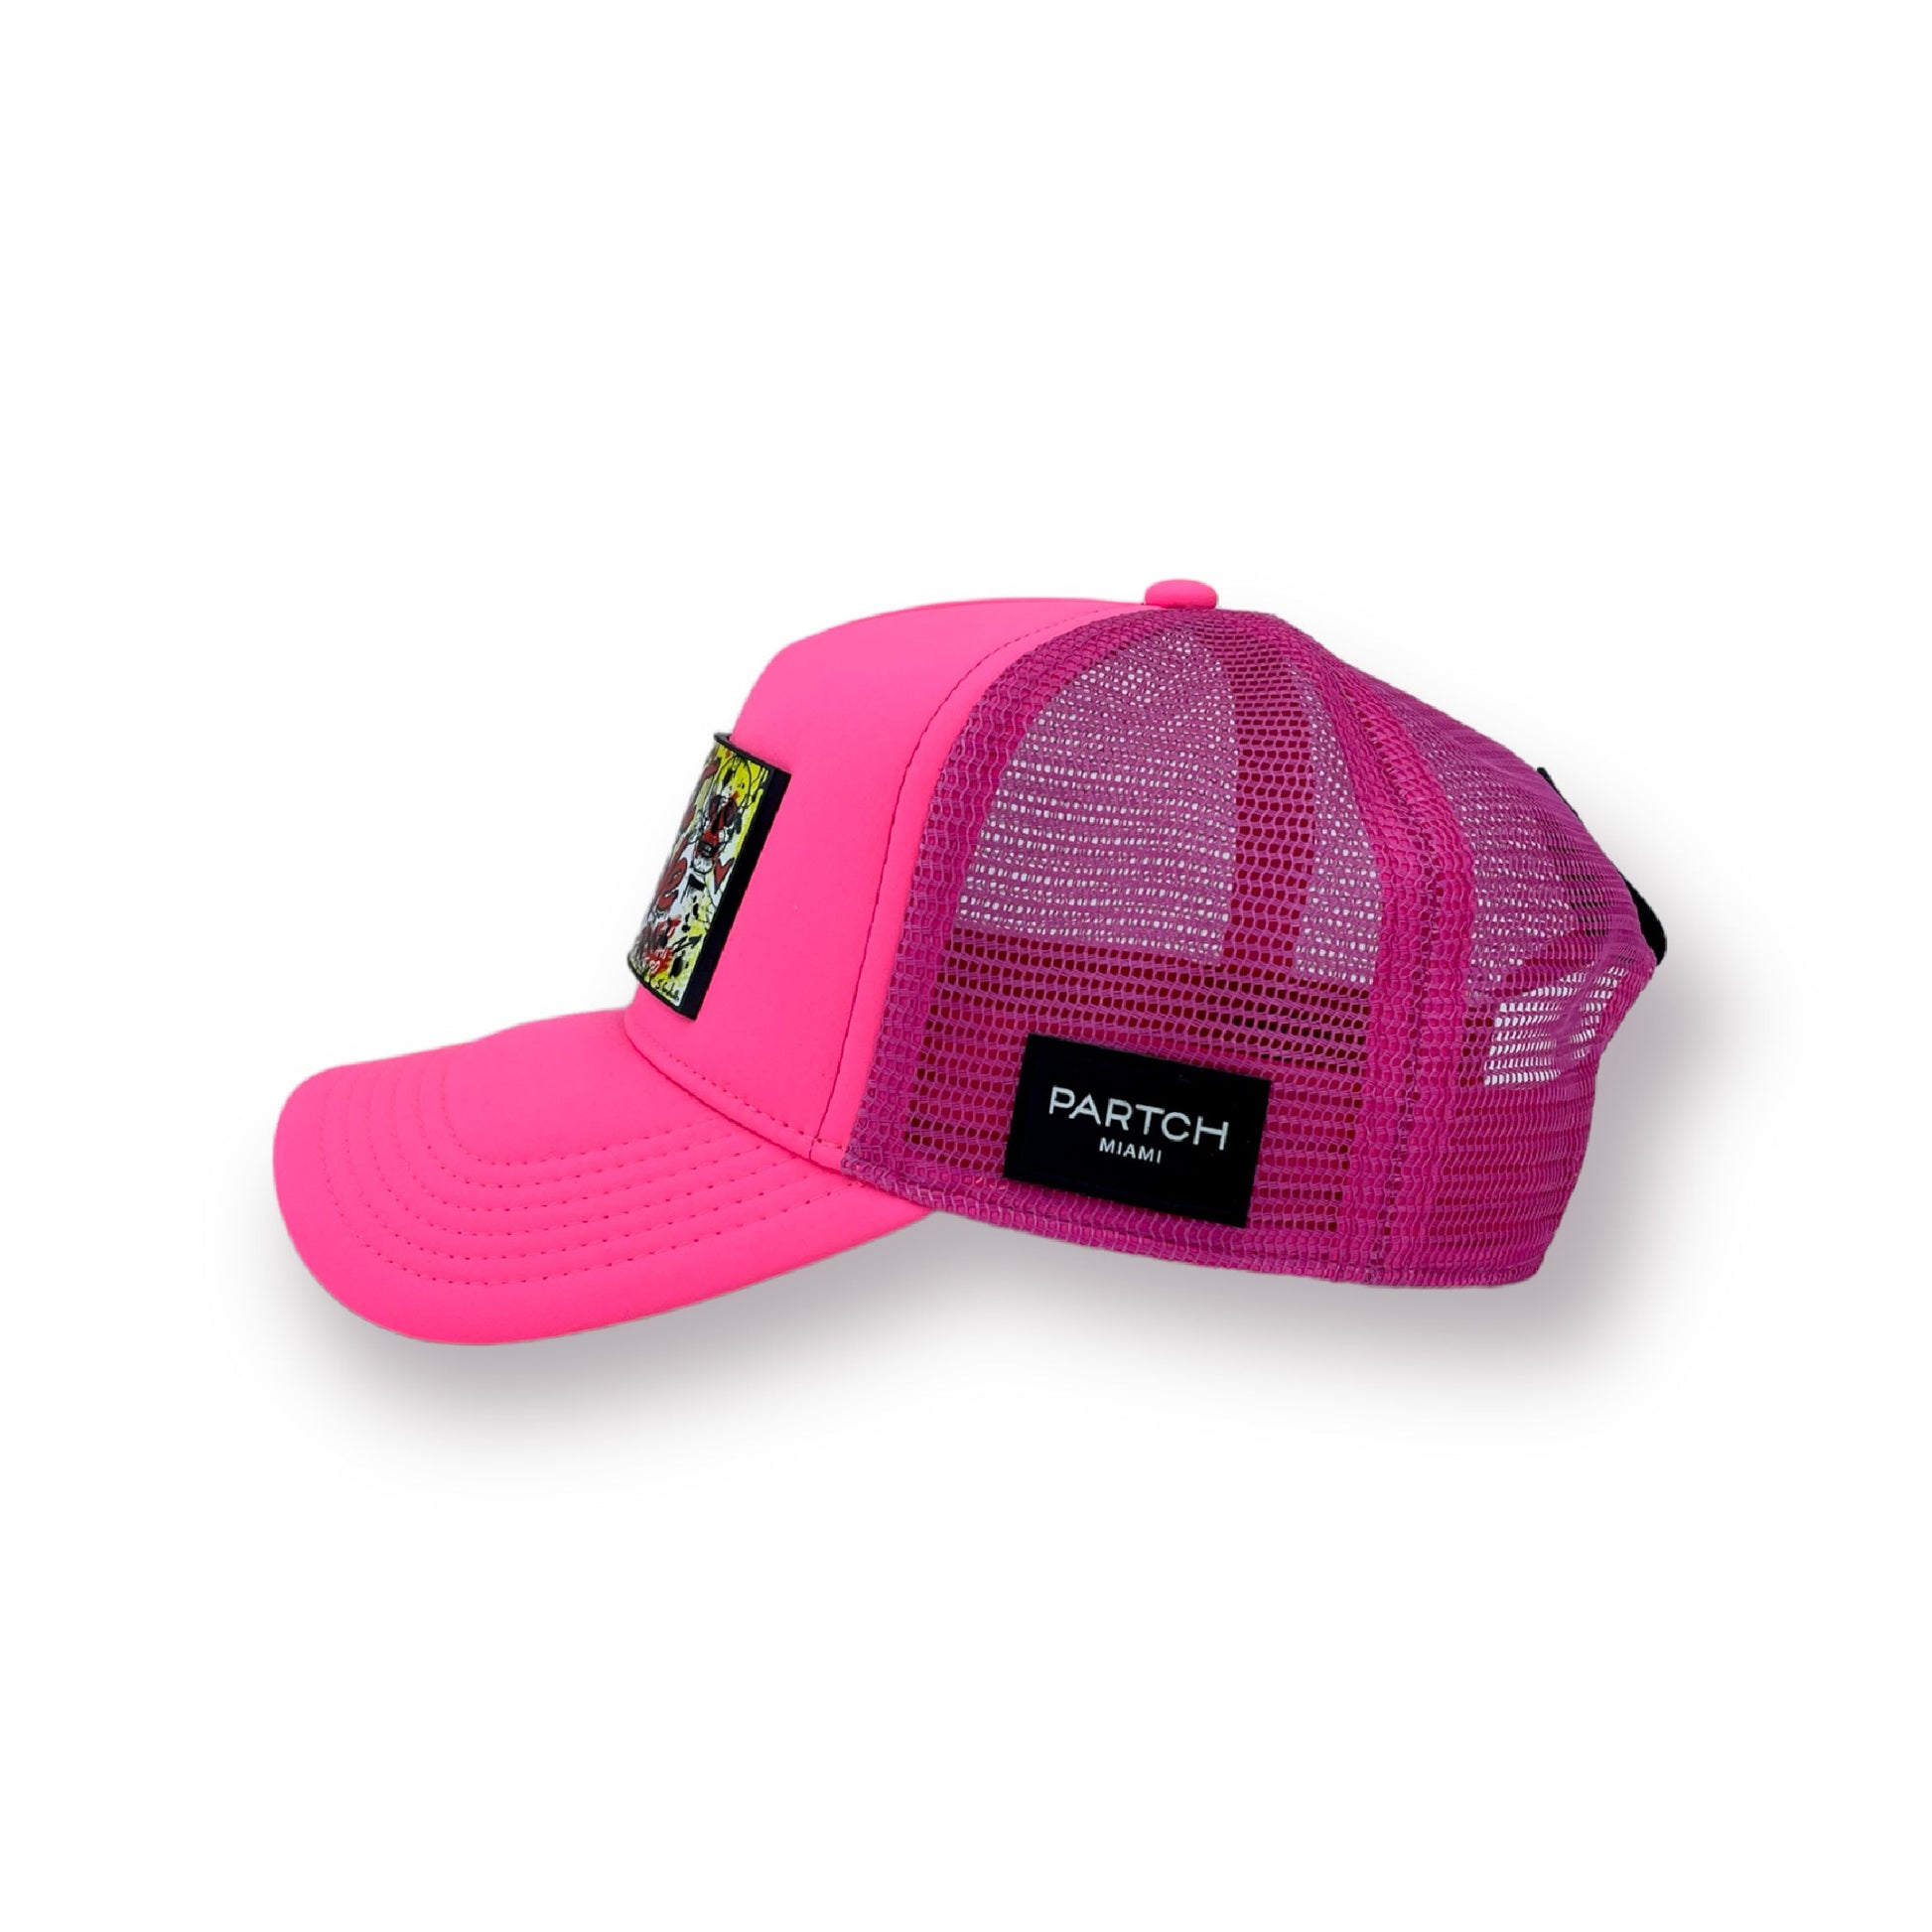 PARTCH Pink trucker hat do what you love art design